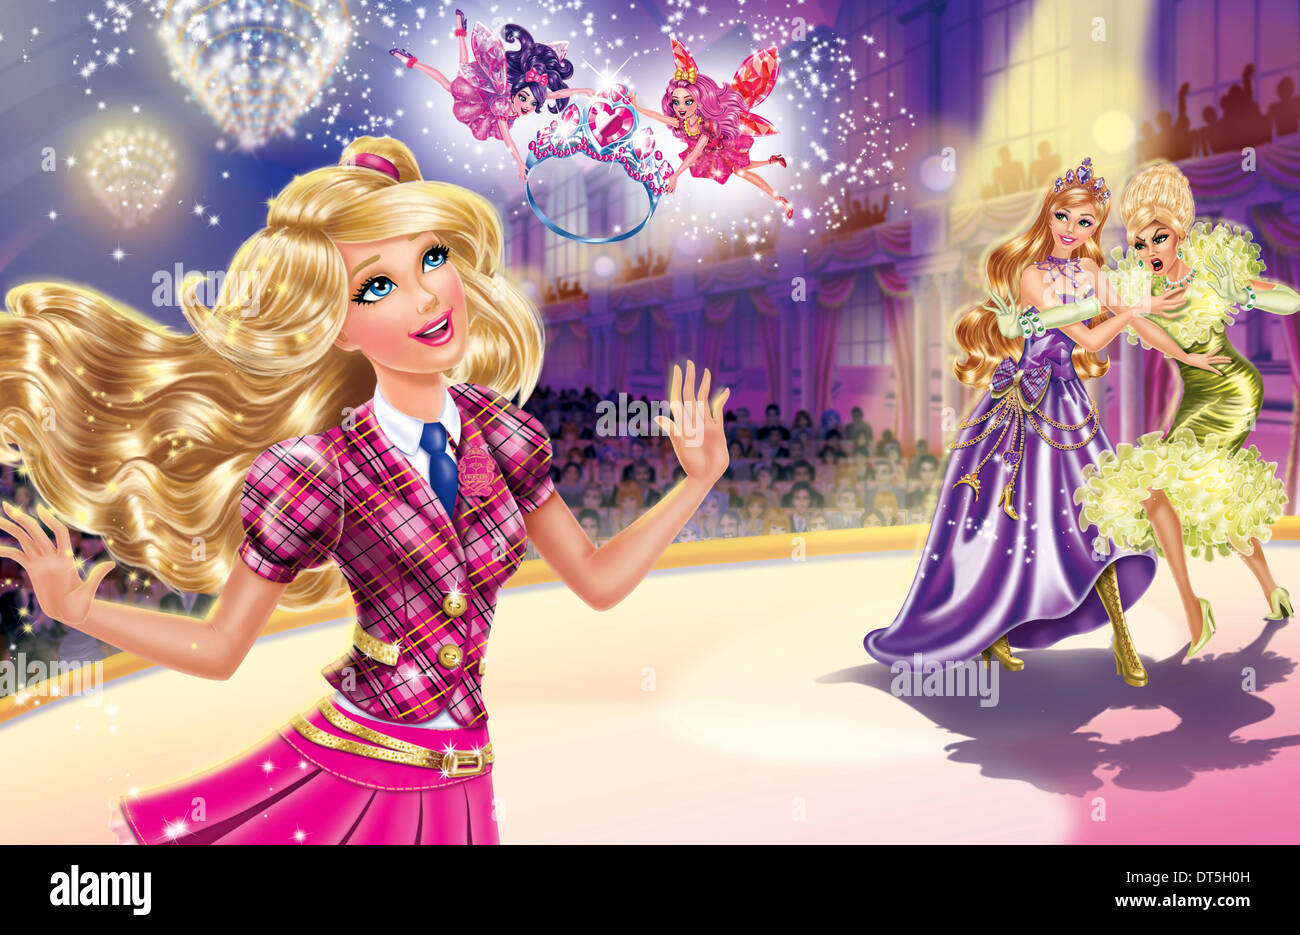 barbie princess charm school full movie in english